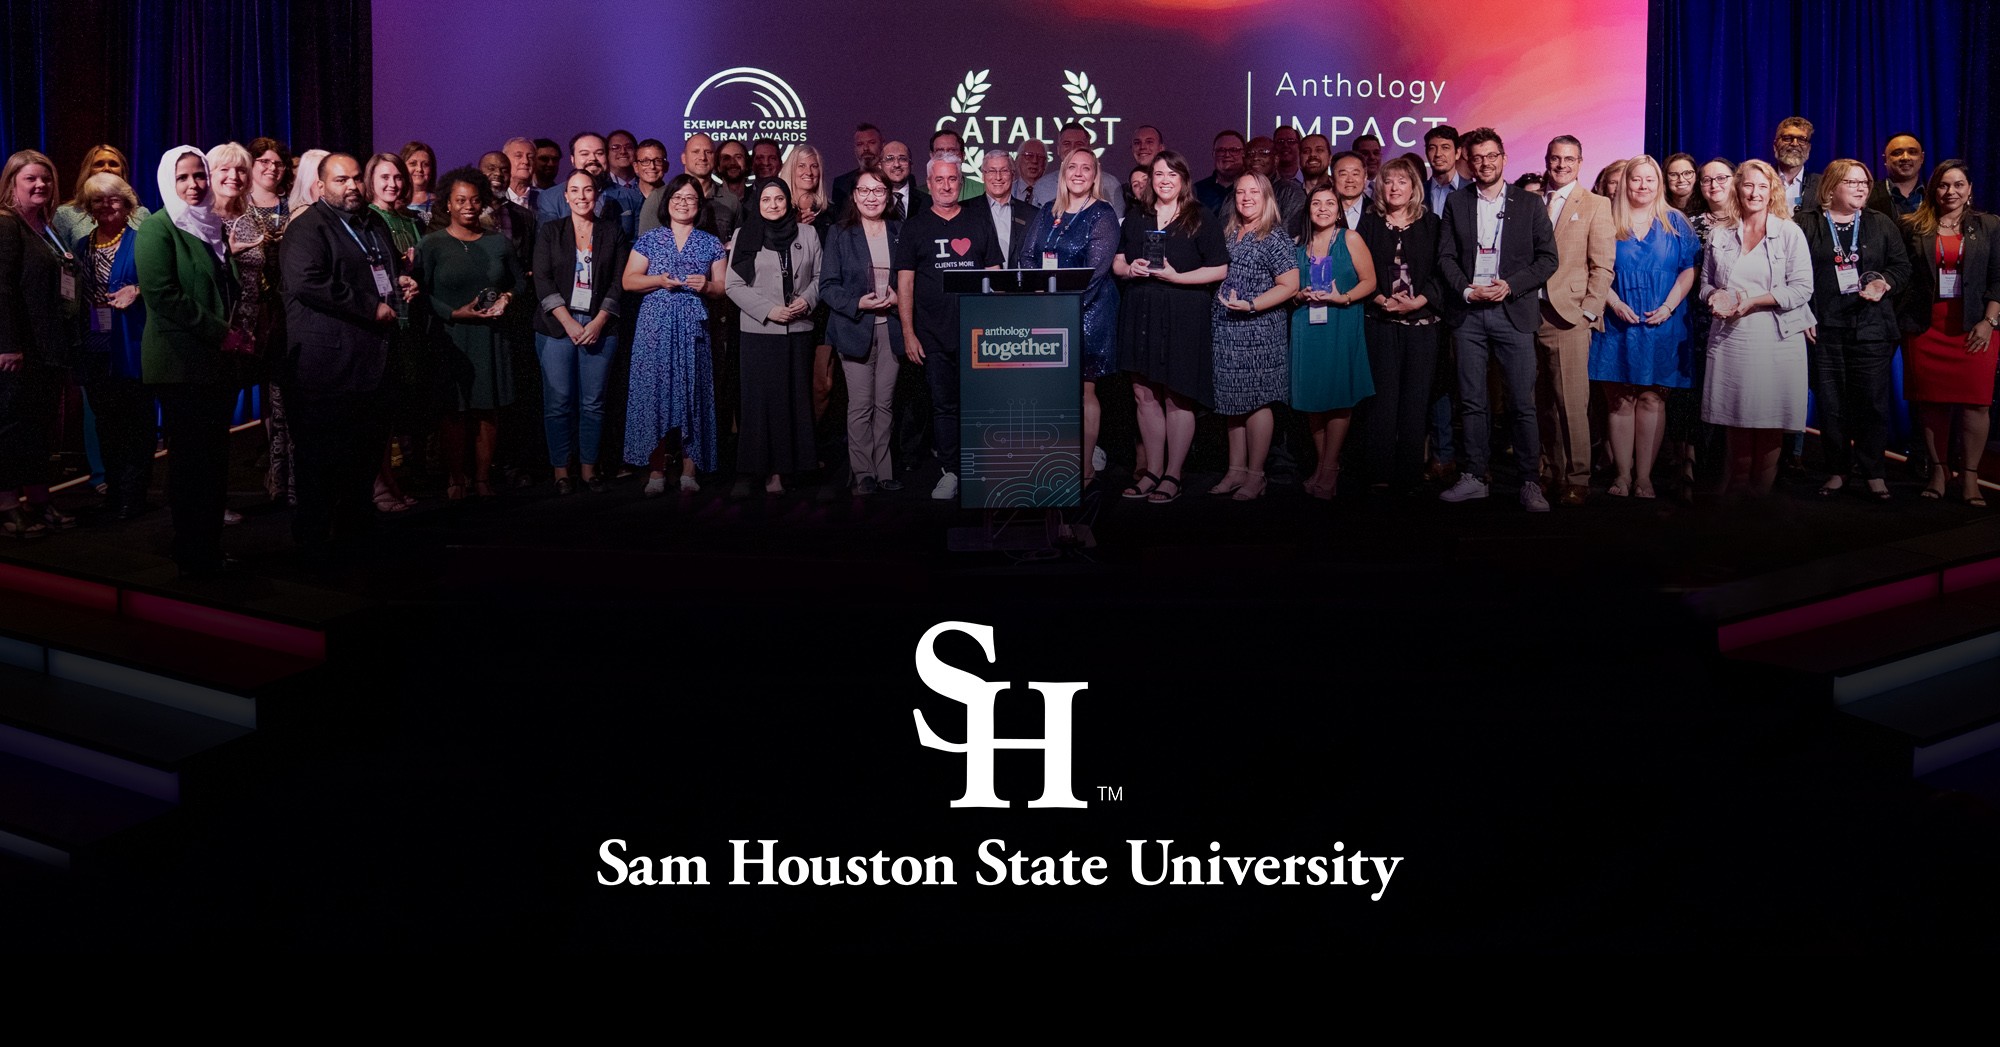 Sam Houston State University at Catalyst awards